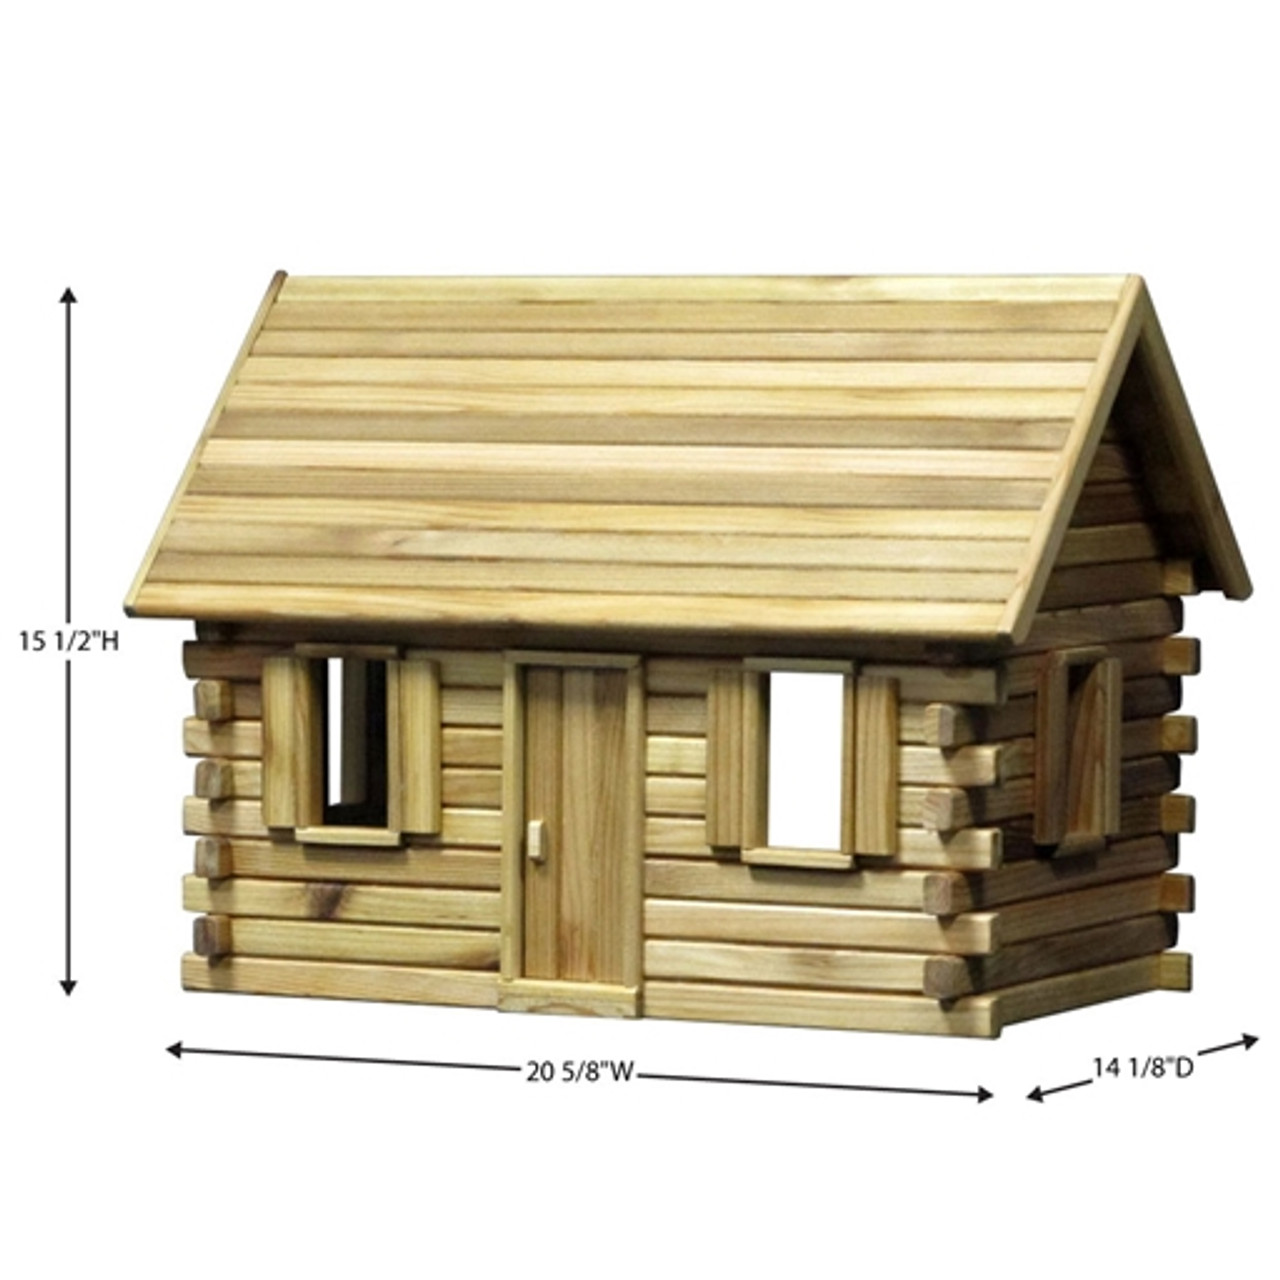 Homesteader Barn - Mini Log Cabins - Log cabin toys